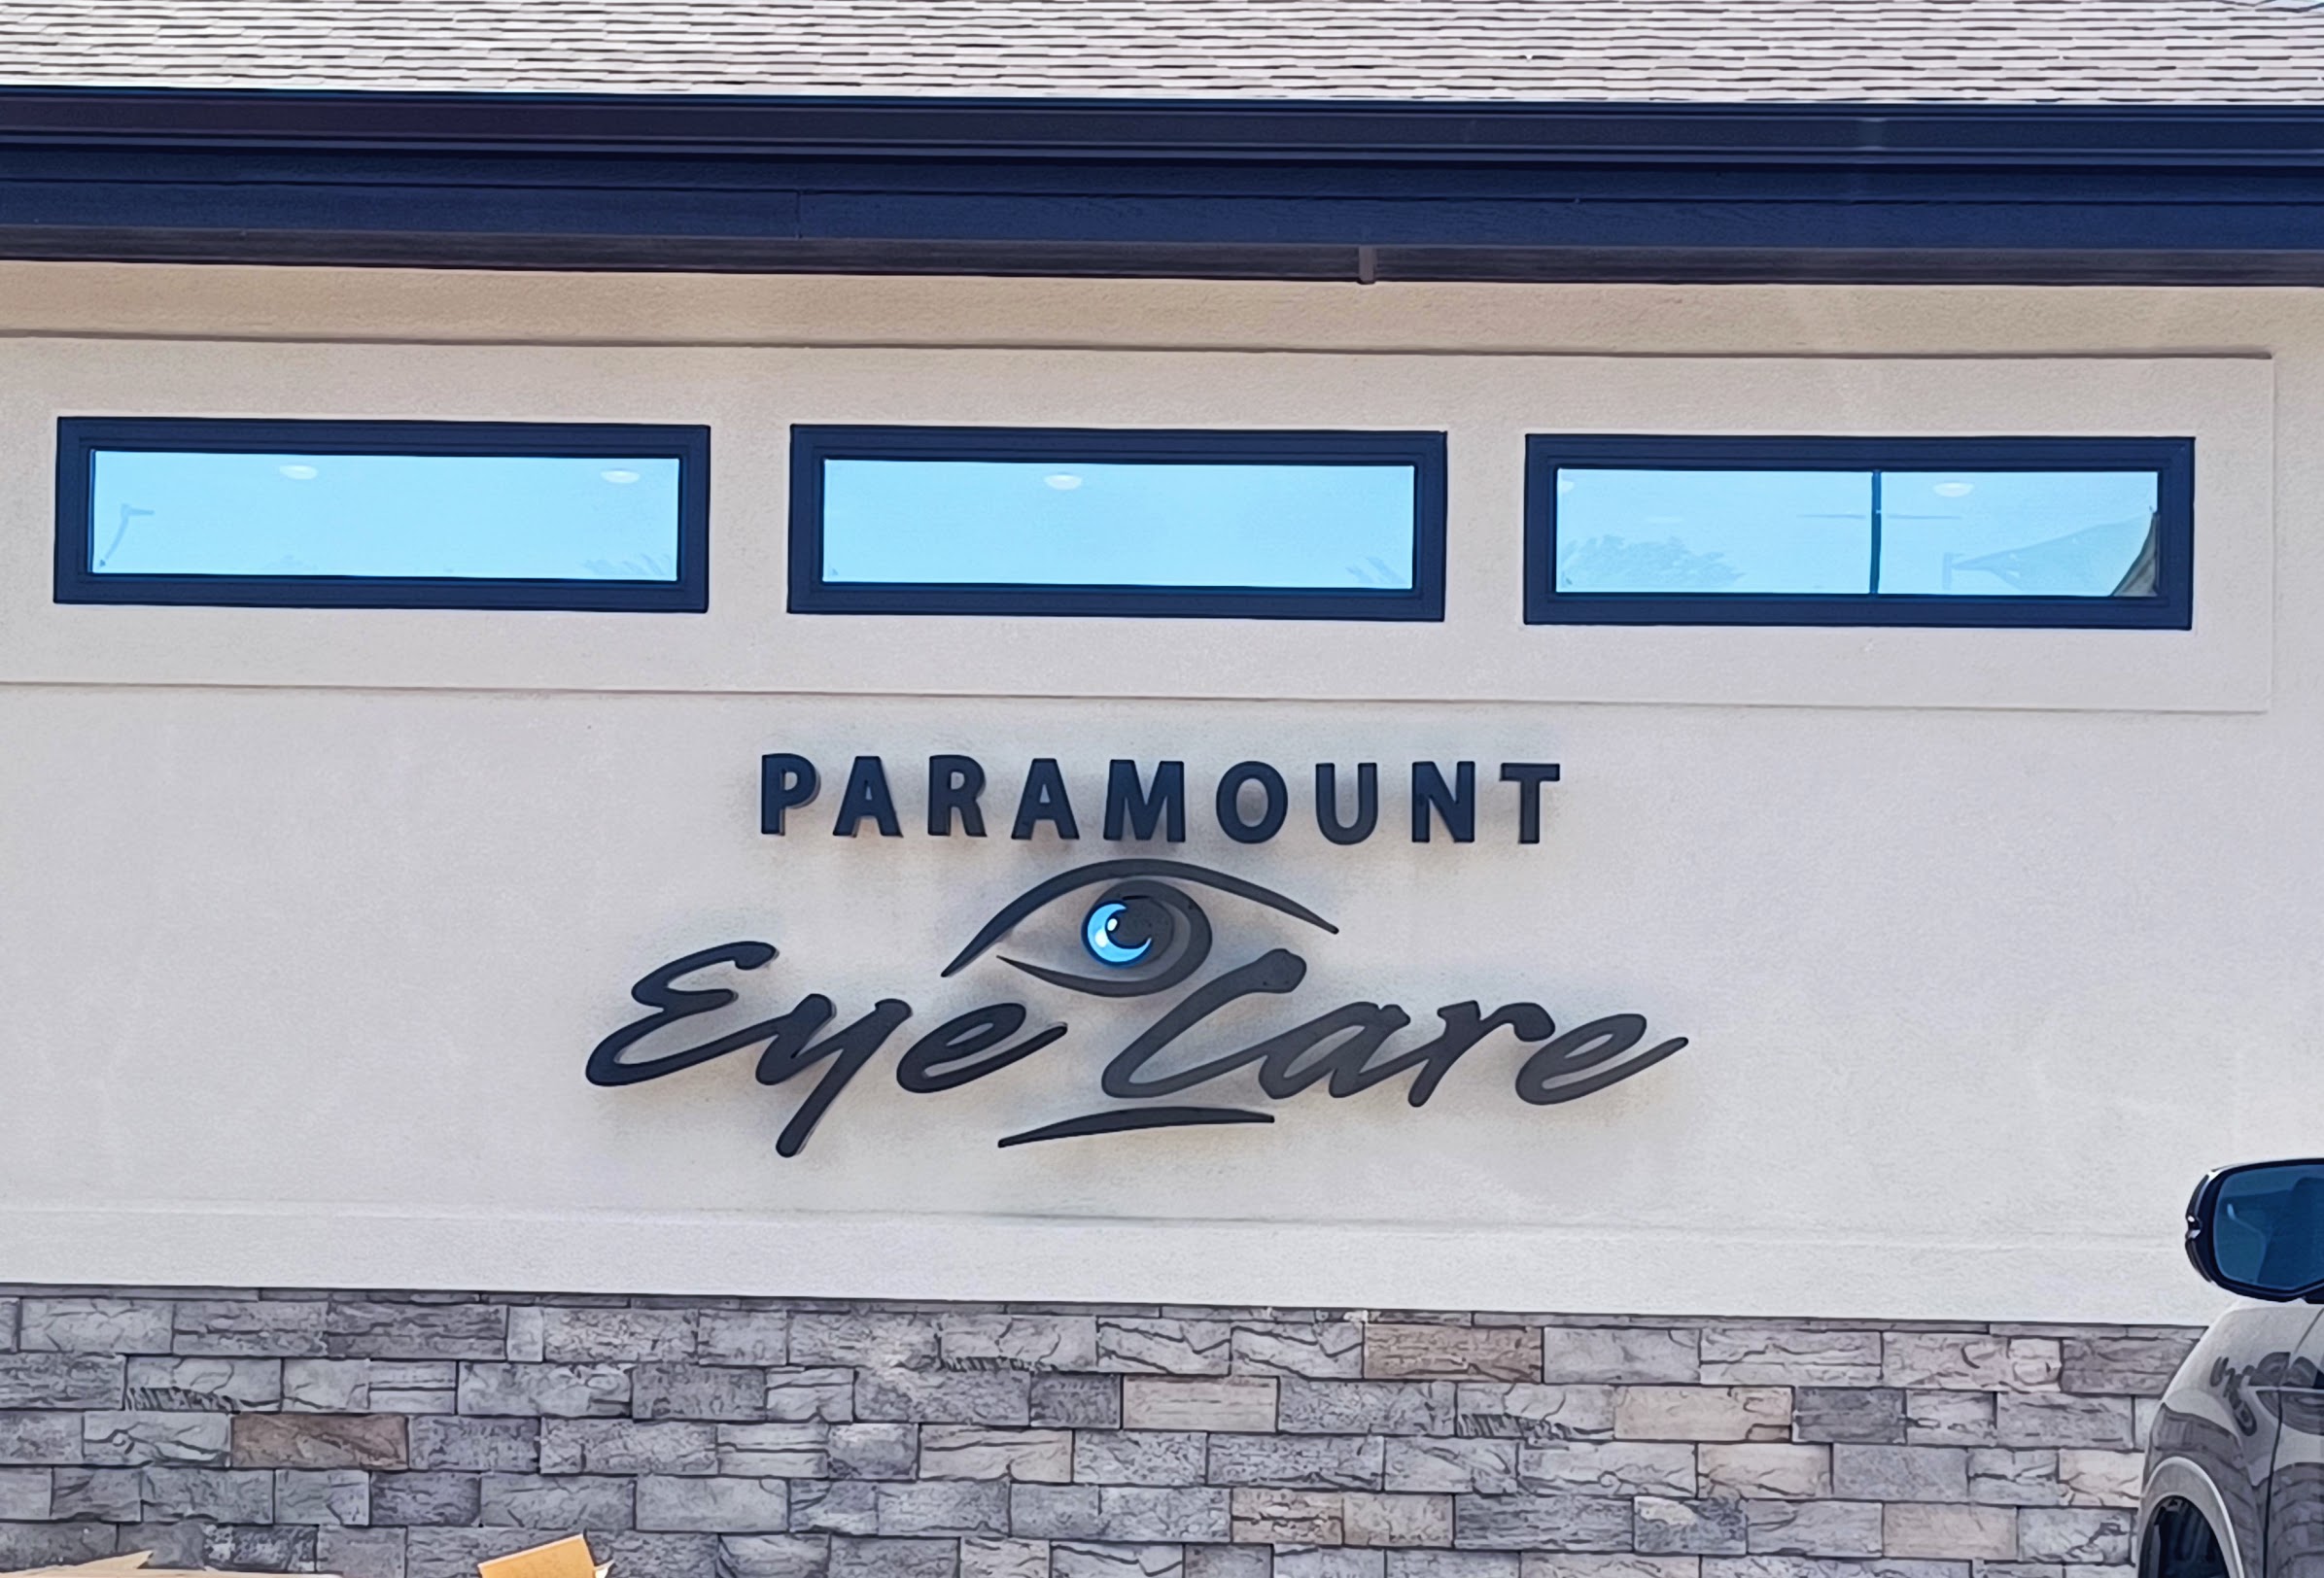 Paramount Eye Care Exterior